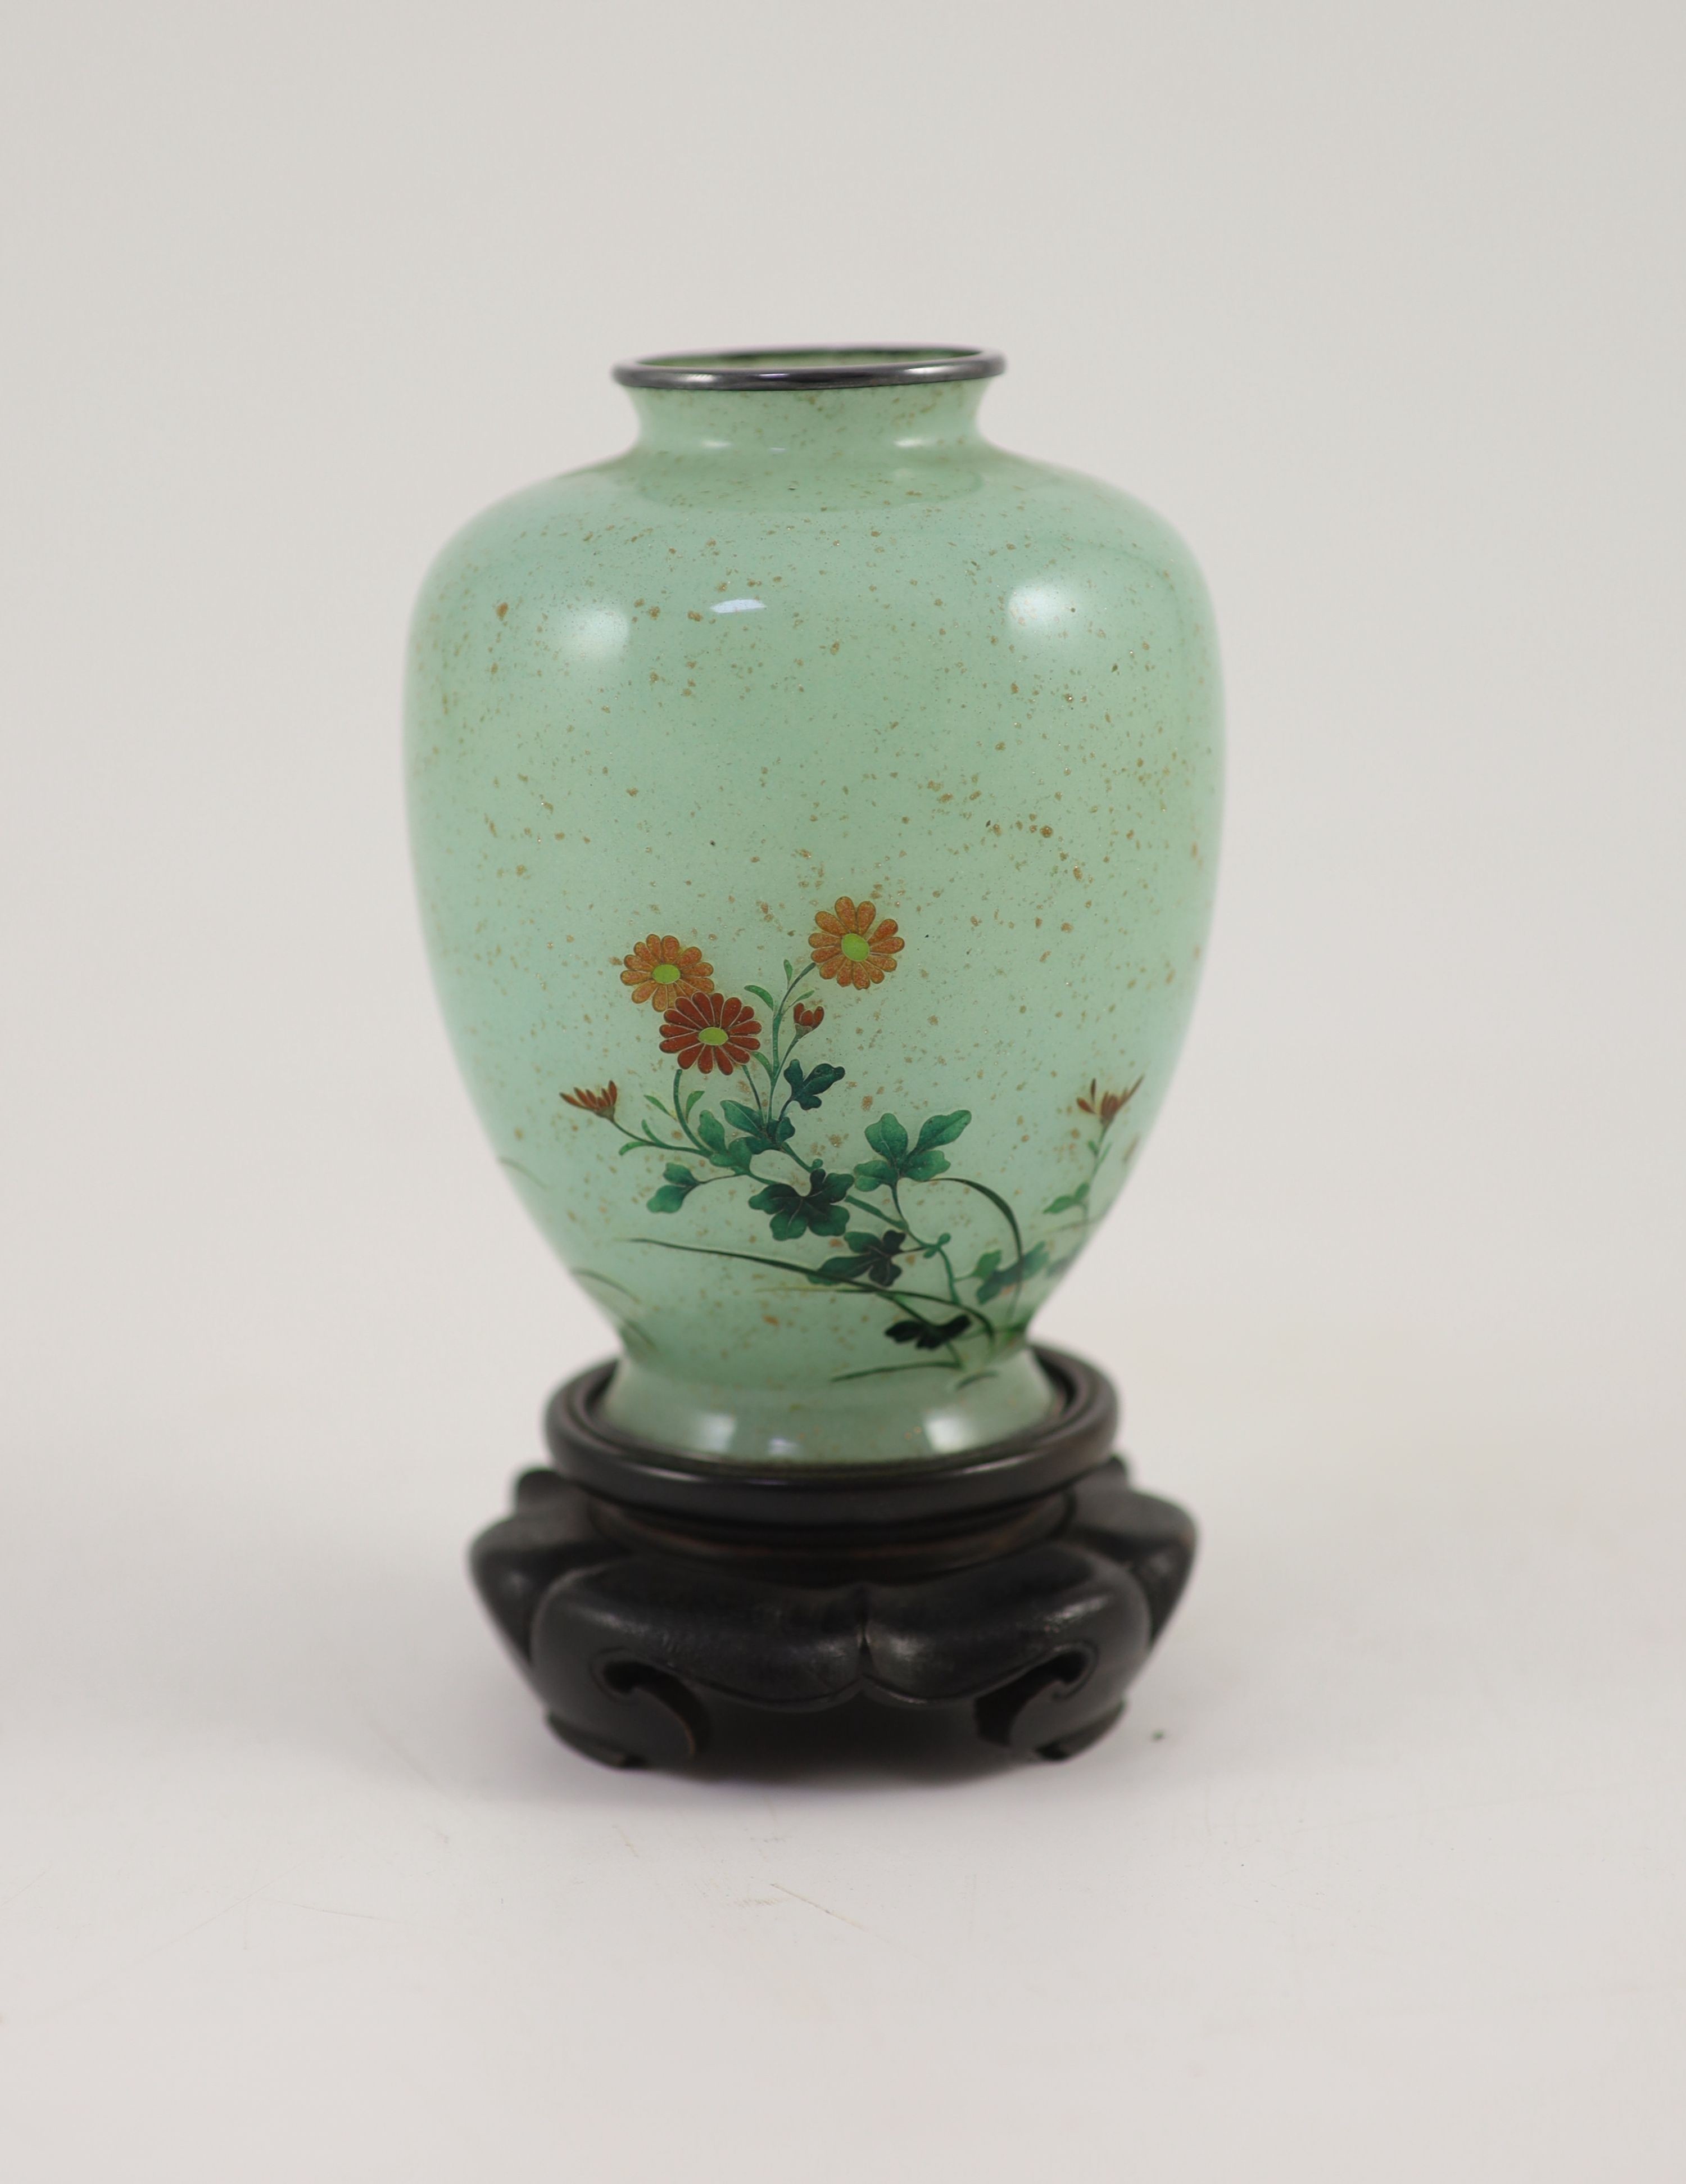 A Japanese plique-à-jour enamel vase, early 20th century, 12 cm high, wood stand, internal hairline cracks